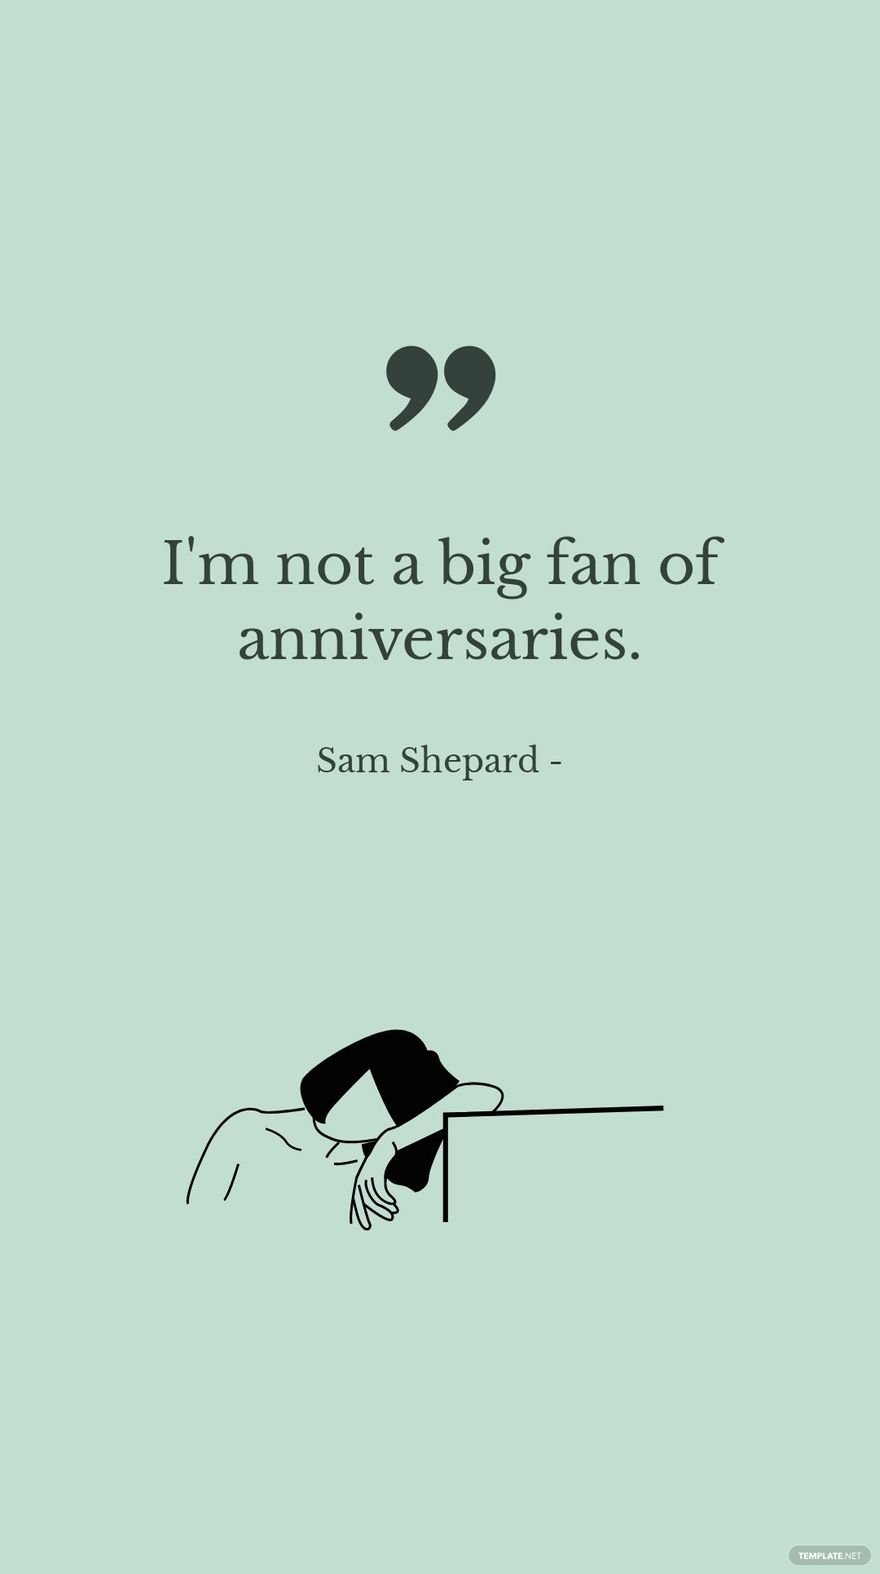 Free Sam Shepard - I'm not a big fan of anniversaries.